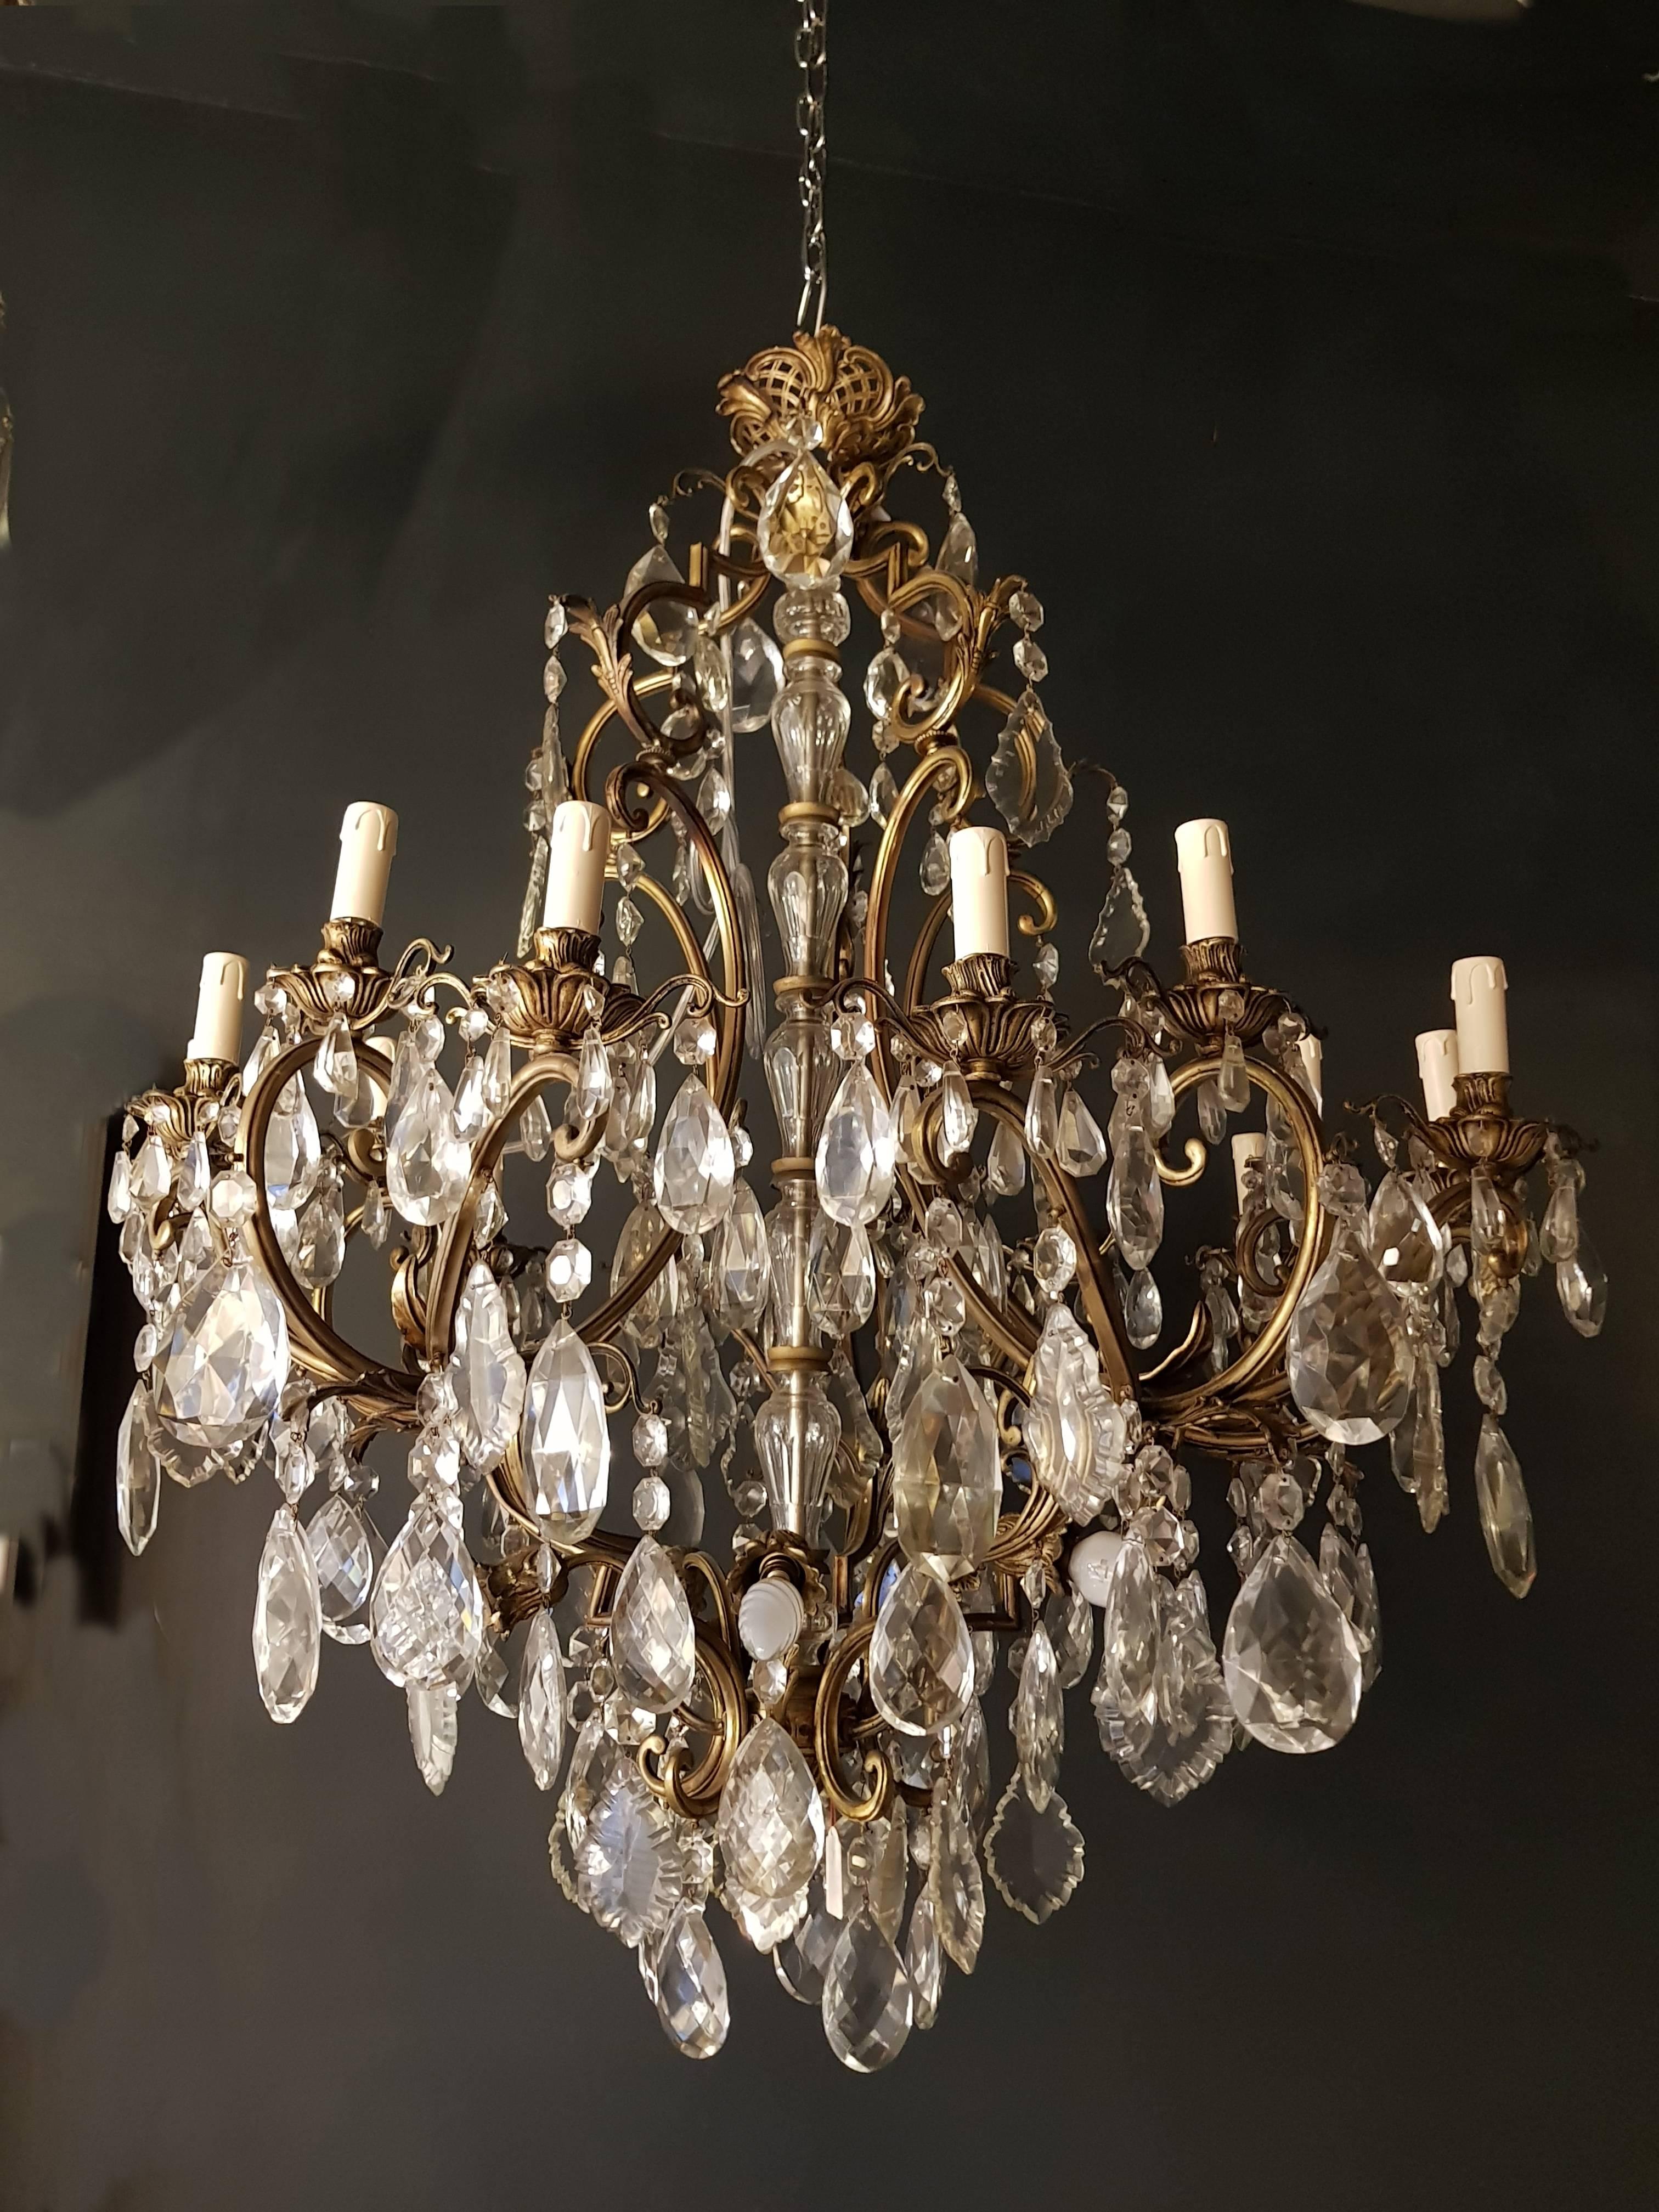 European Antique Crystal Chandelier Antique Ceiling Lamp Big